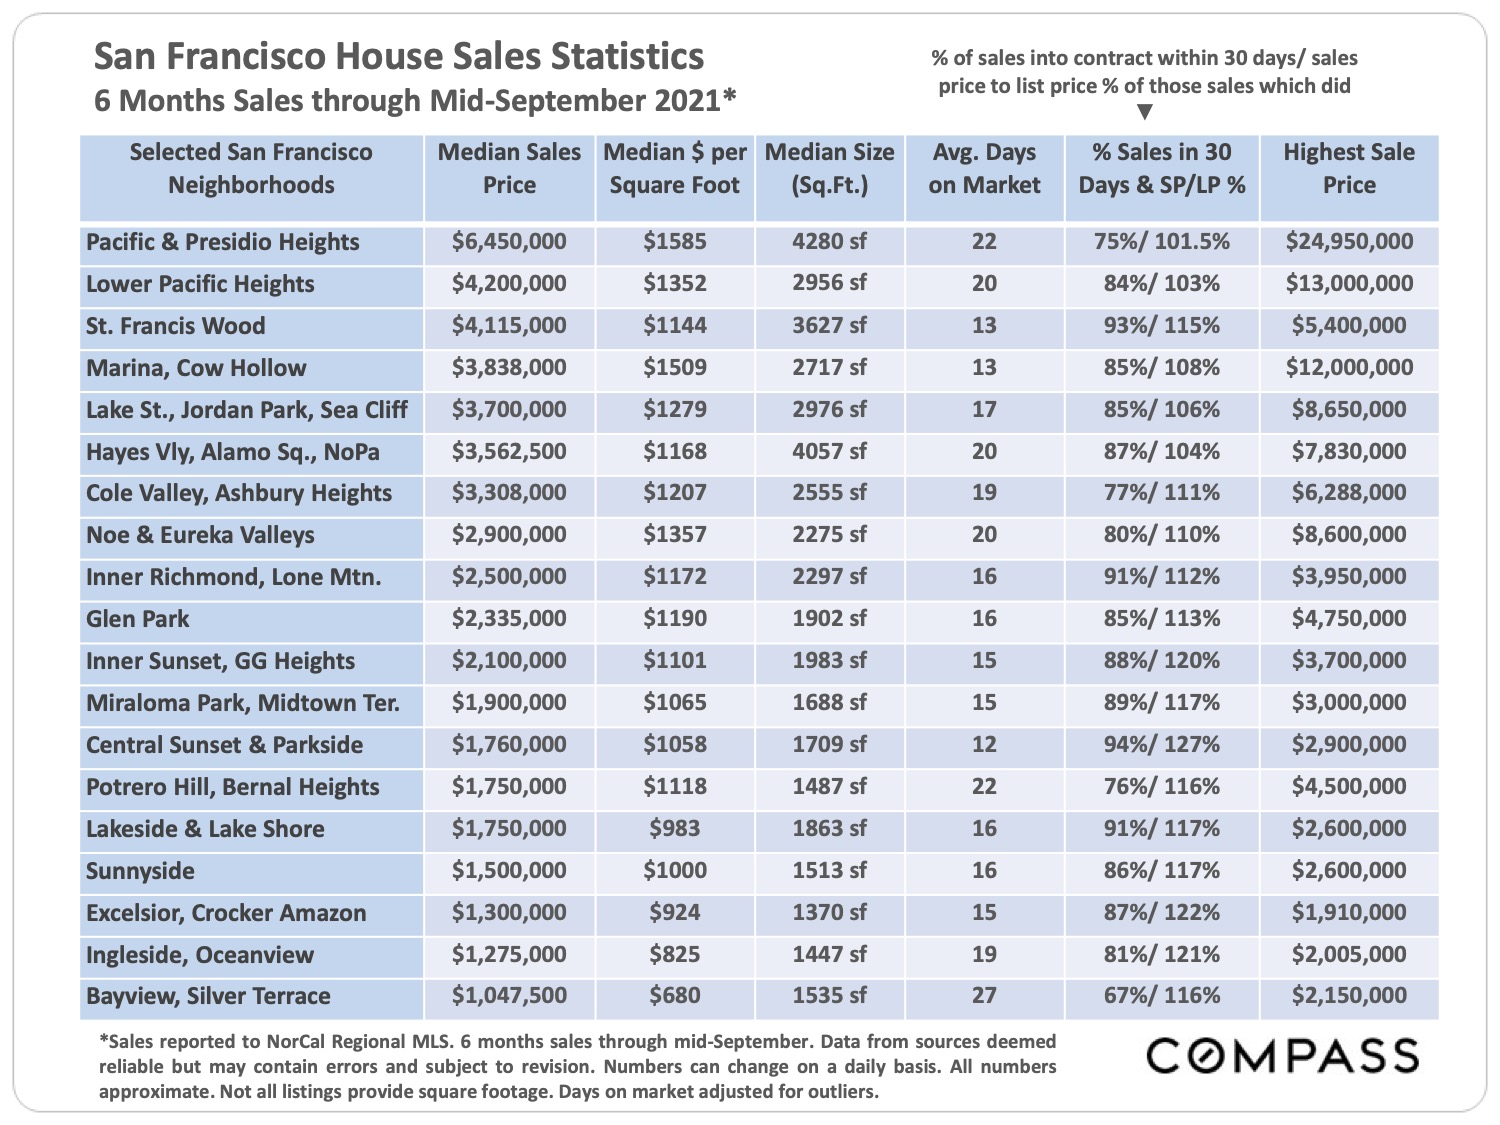 San Francisco House Sales Statistics - 6 Months Sales Through Mid-September 2021